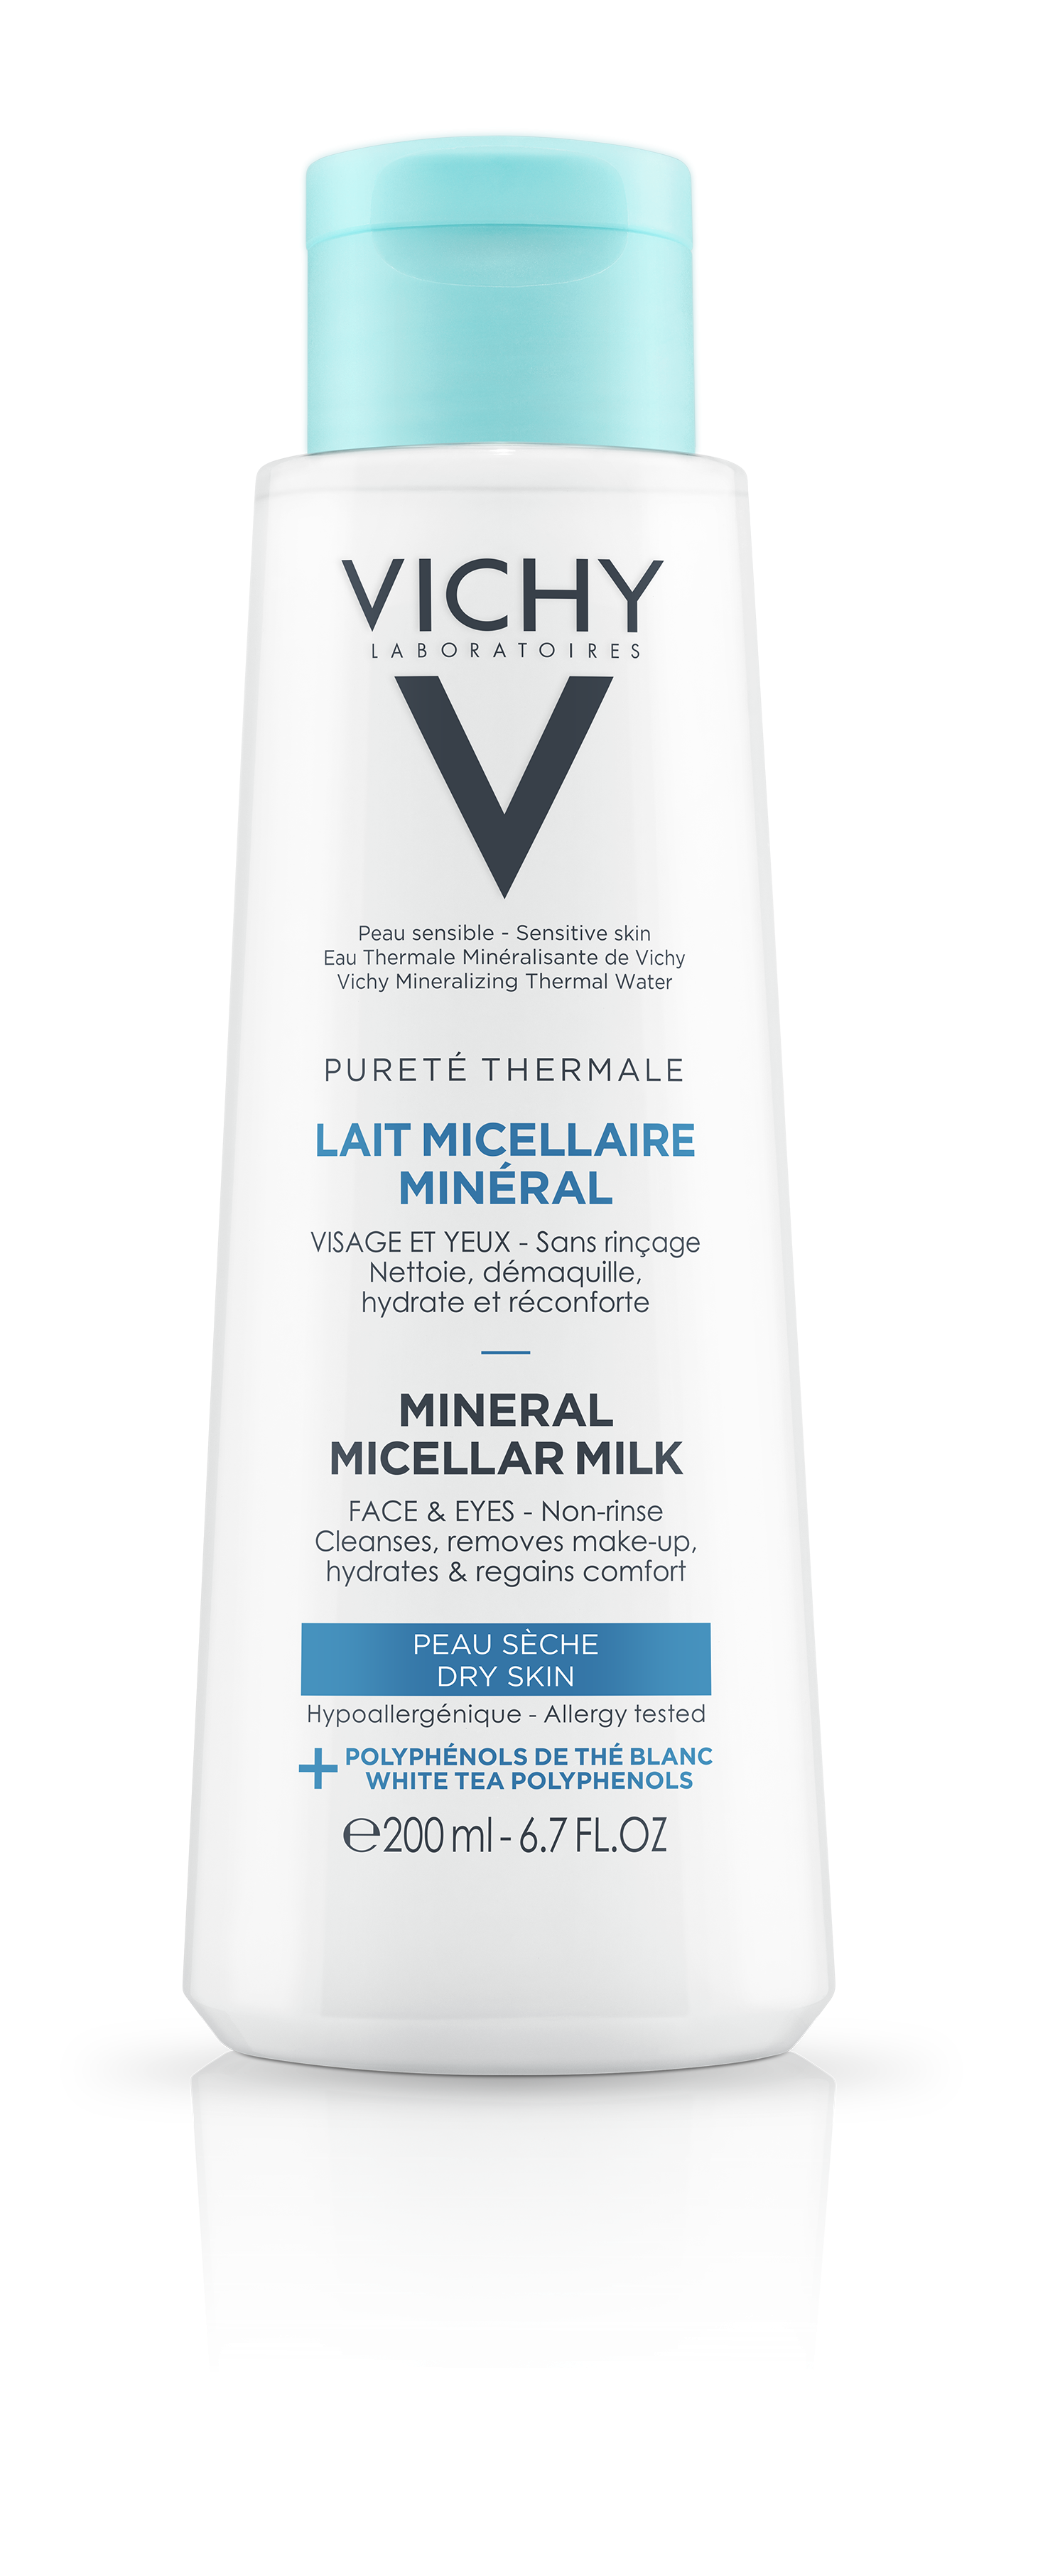 Мицеллярное молочко Vichy Purete Thermale, для сухой кожи, 200 мл - фото 2